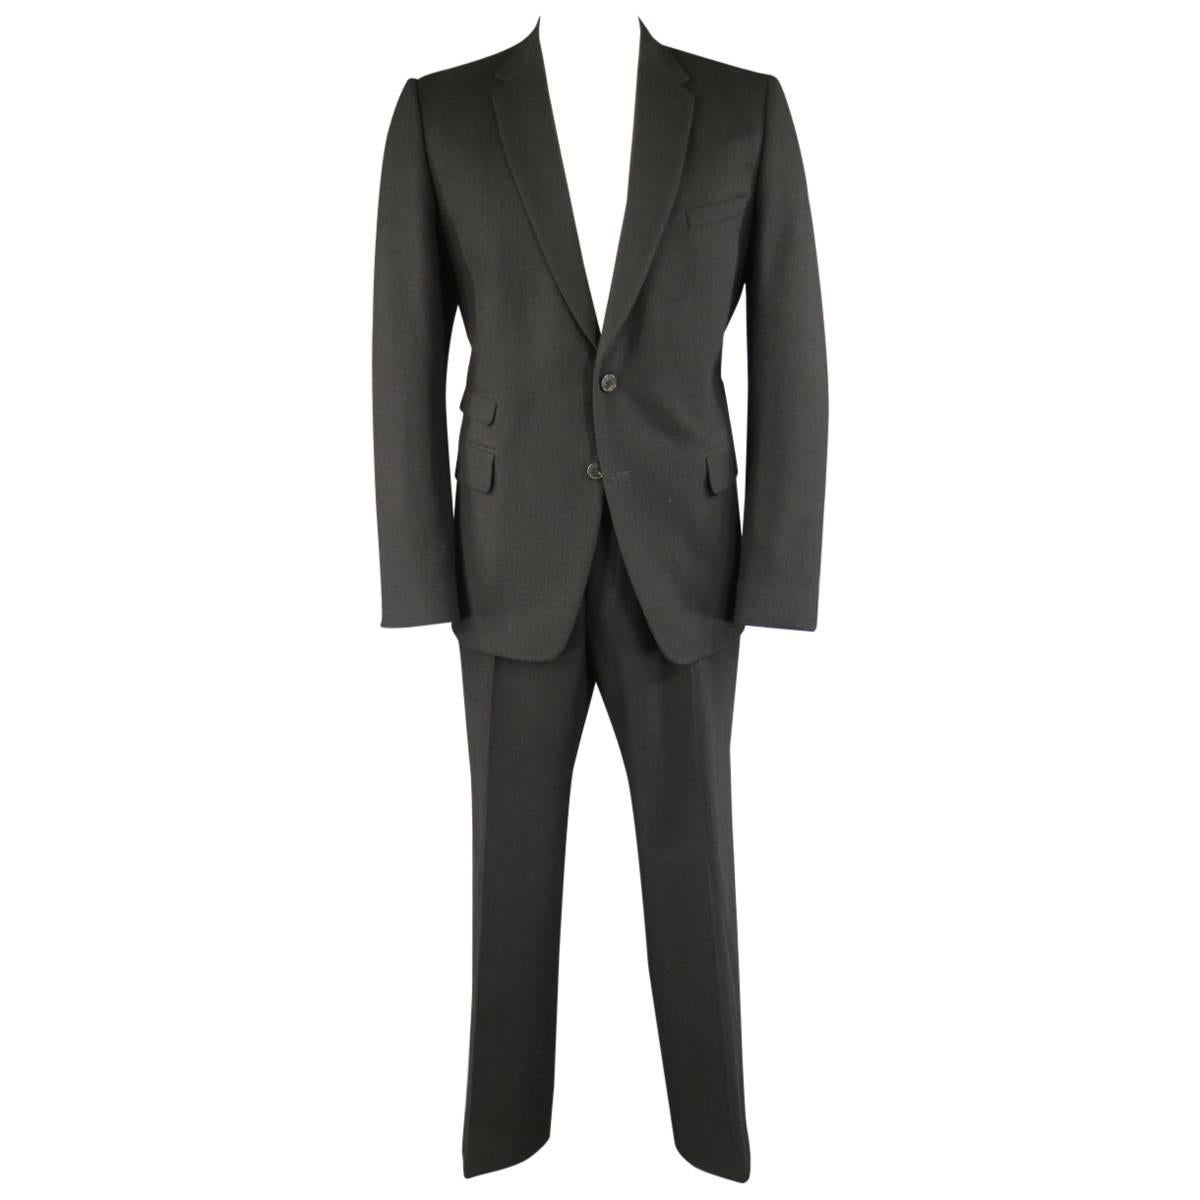 Dries Van Noten Men's Black Wool 36 34 2 Button Notch Lapel Suit, 44 Regular 